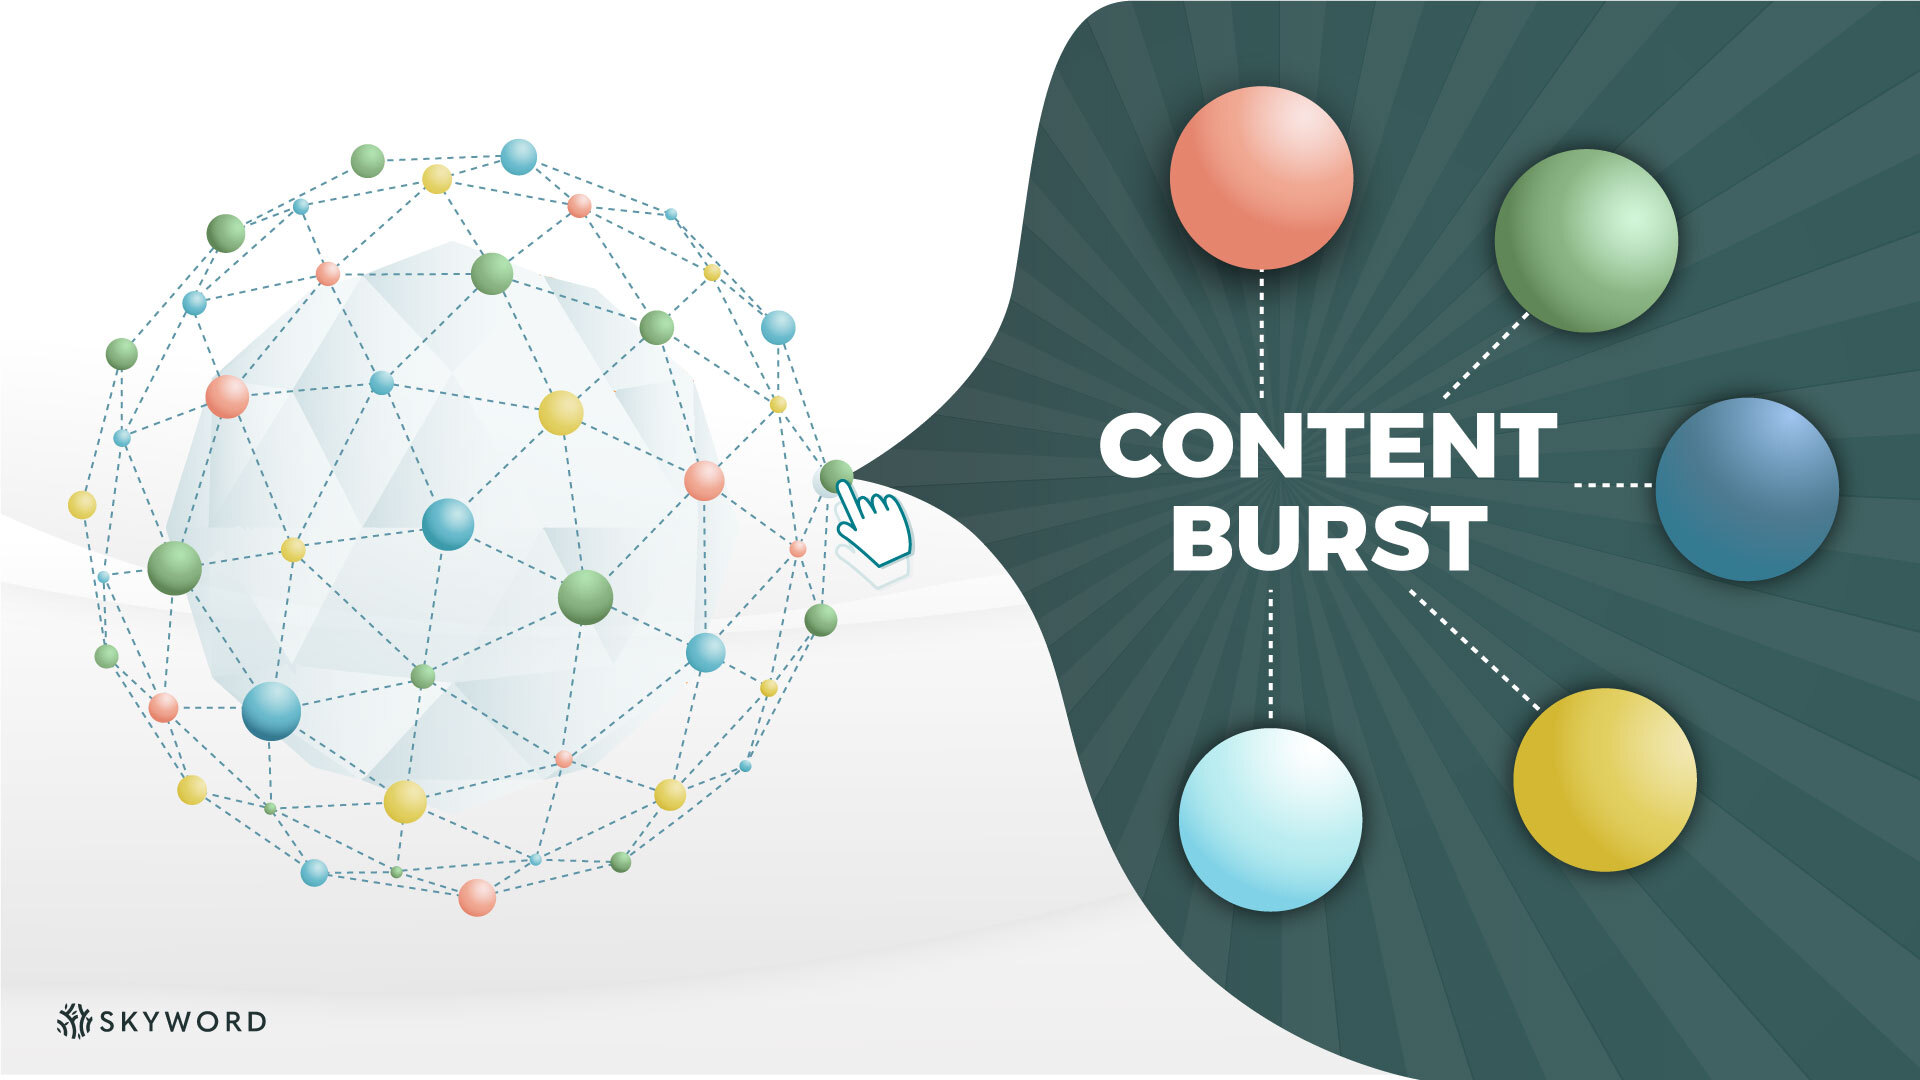 an ecosystem feeds content bursts